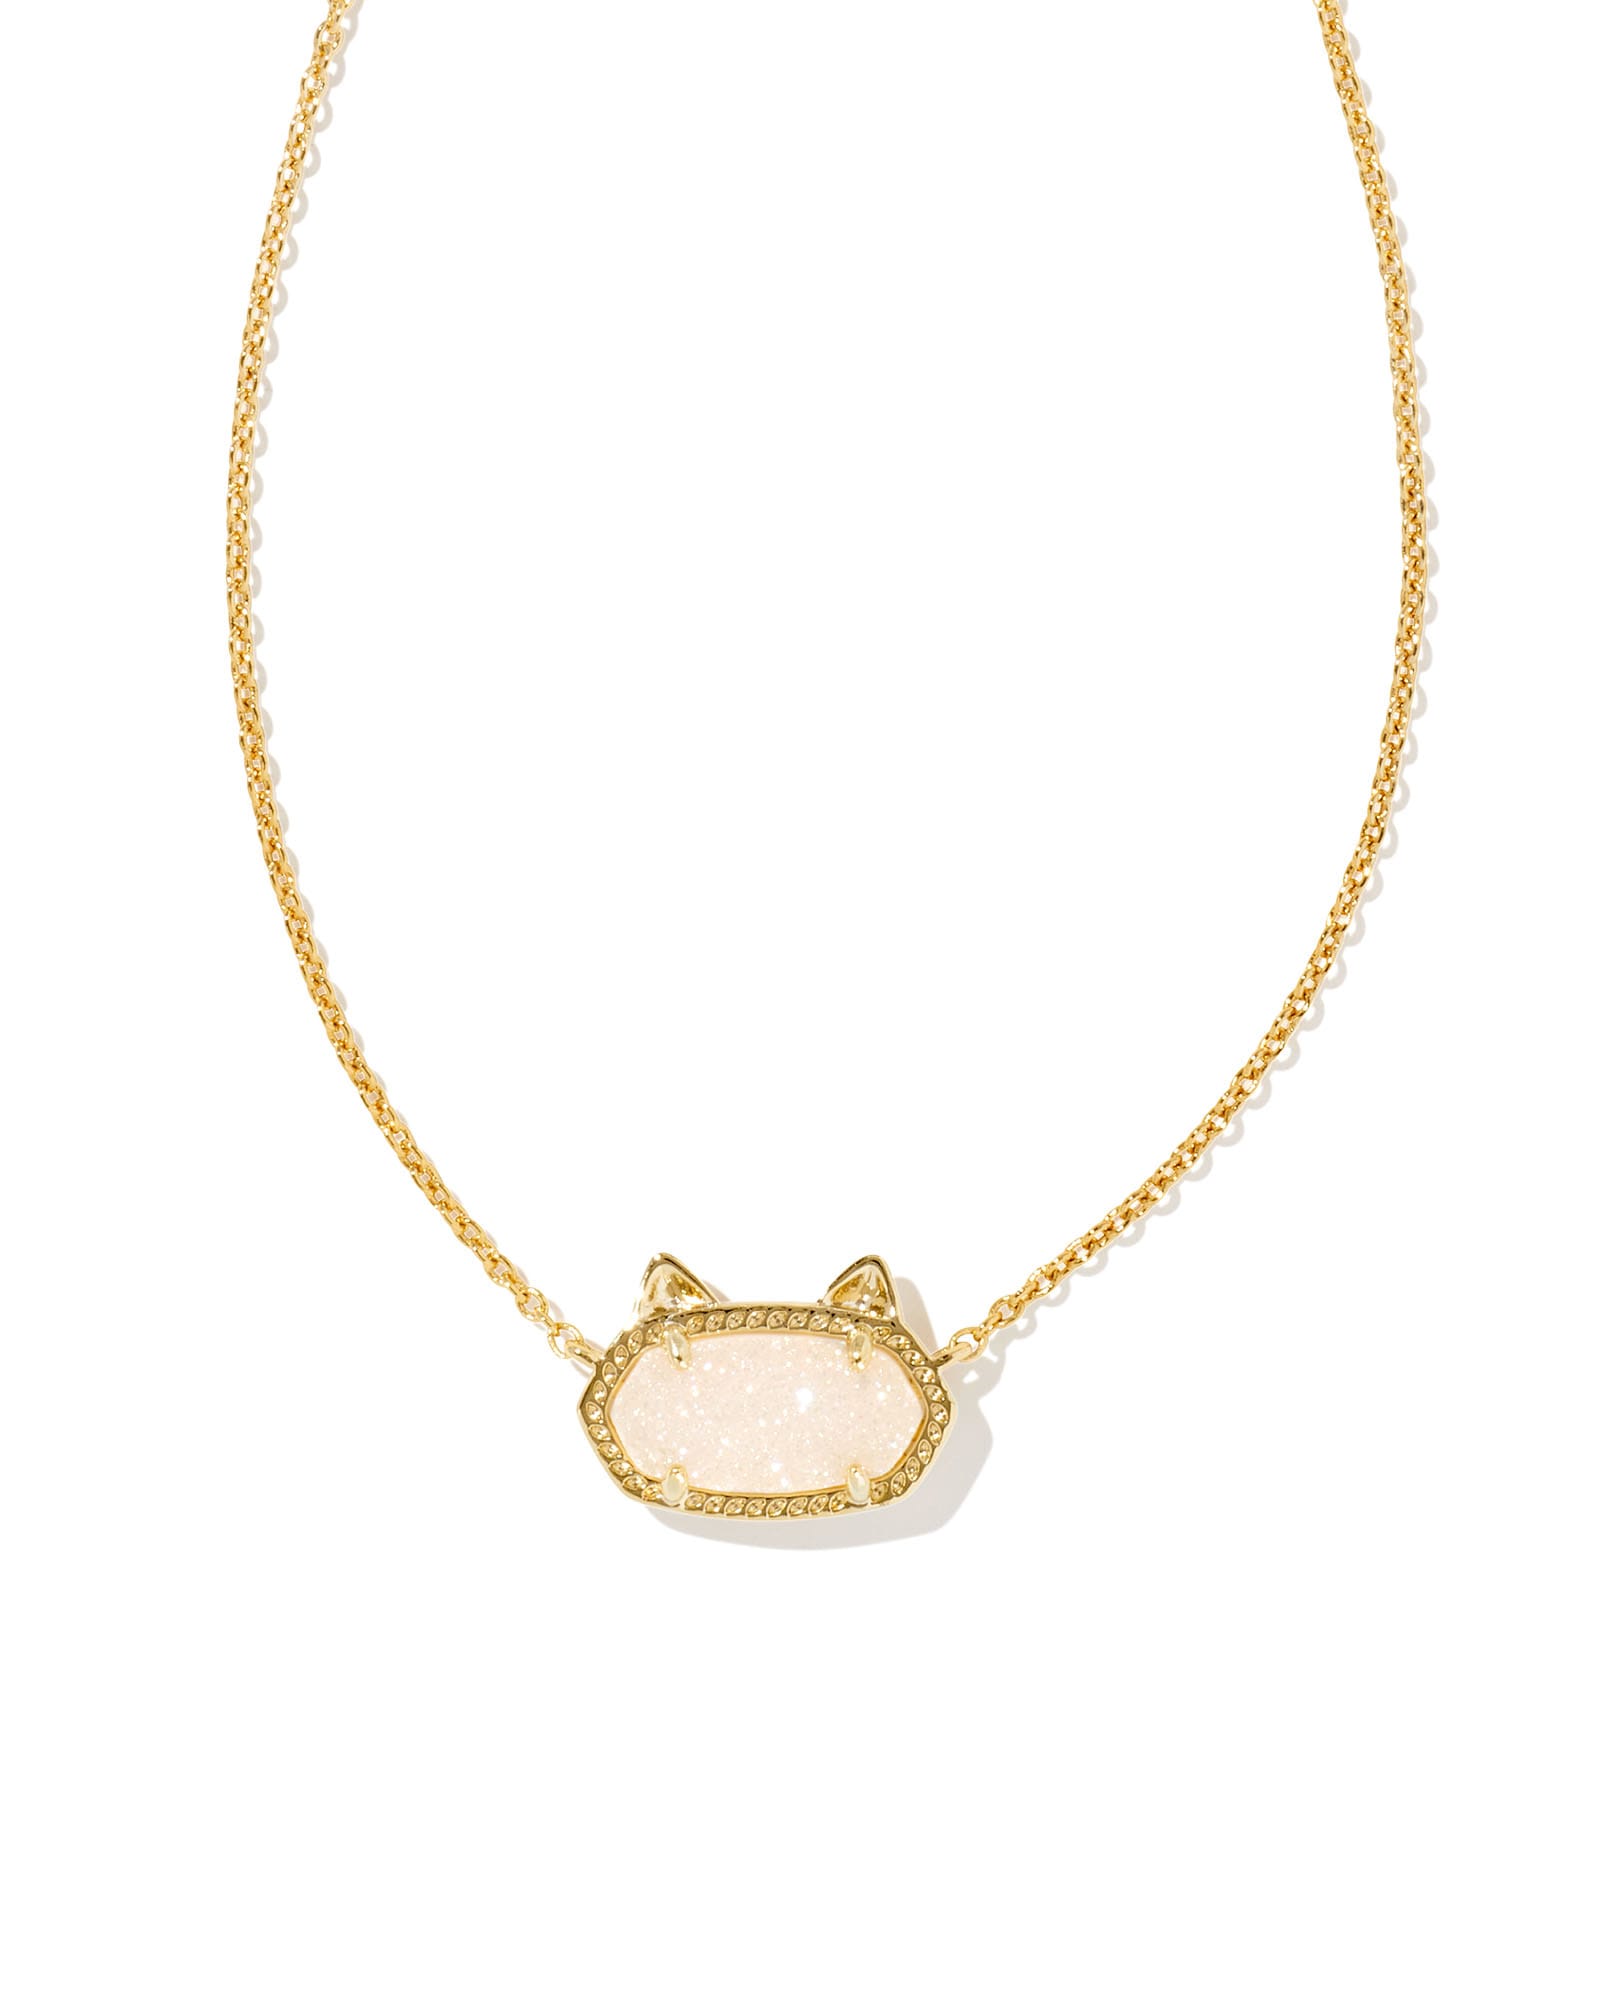 Kendra Scott Elisa Gold Cat Pendant Necklace in Iridescent | Drusy